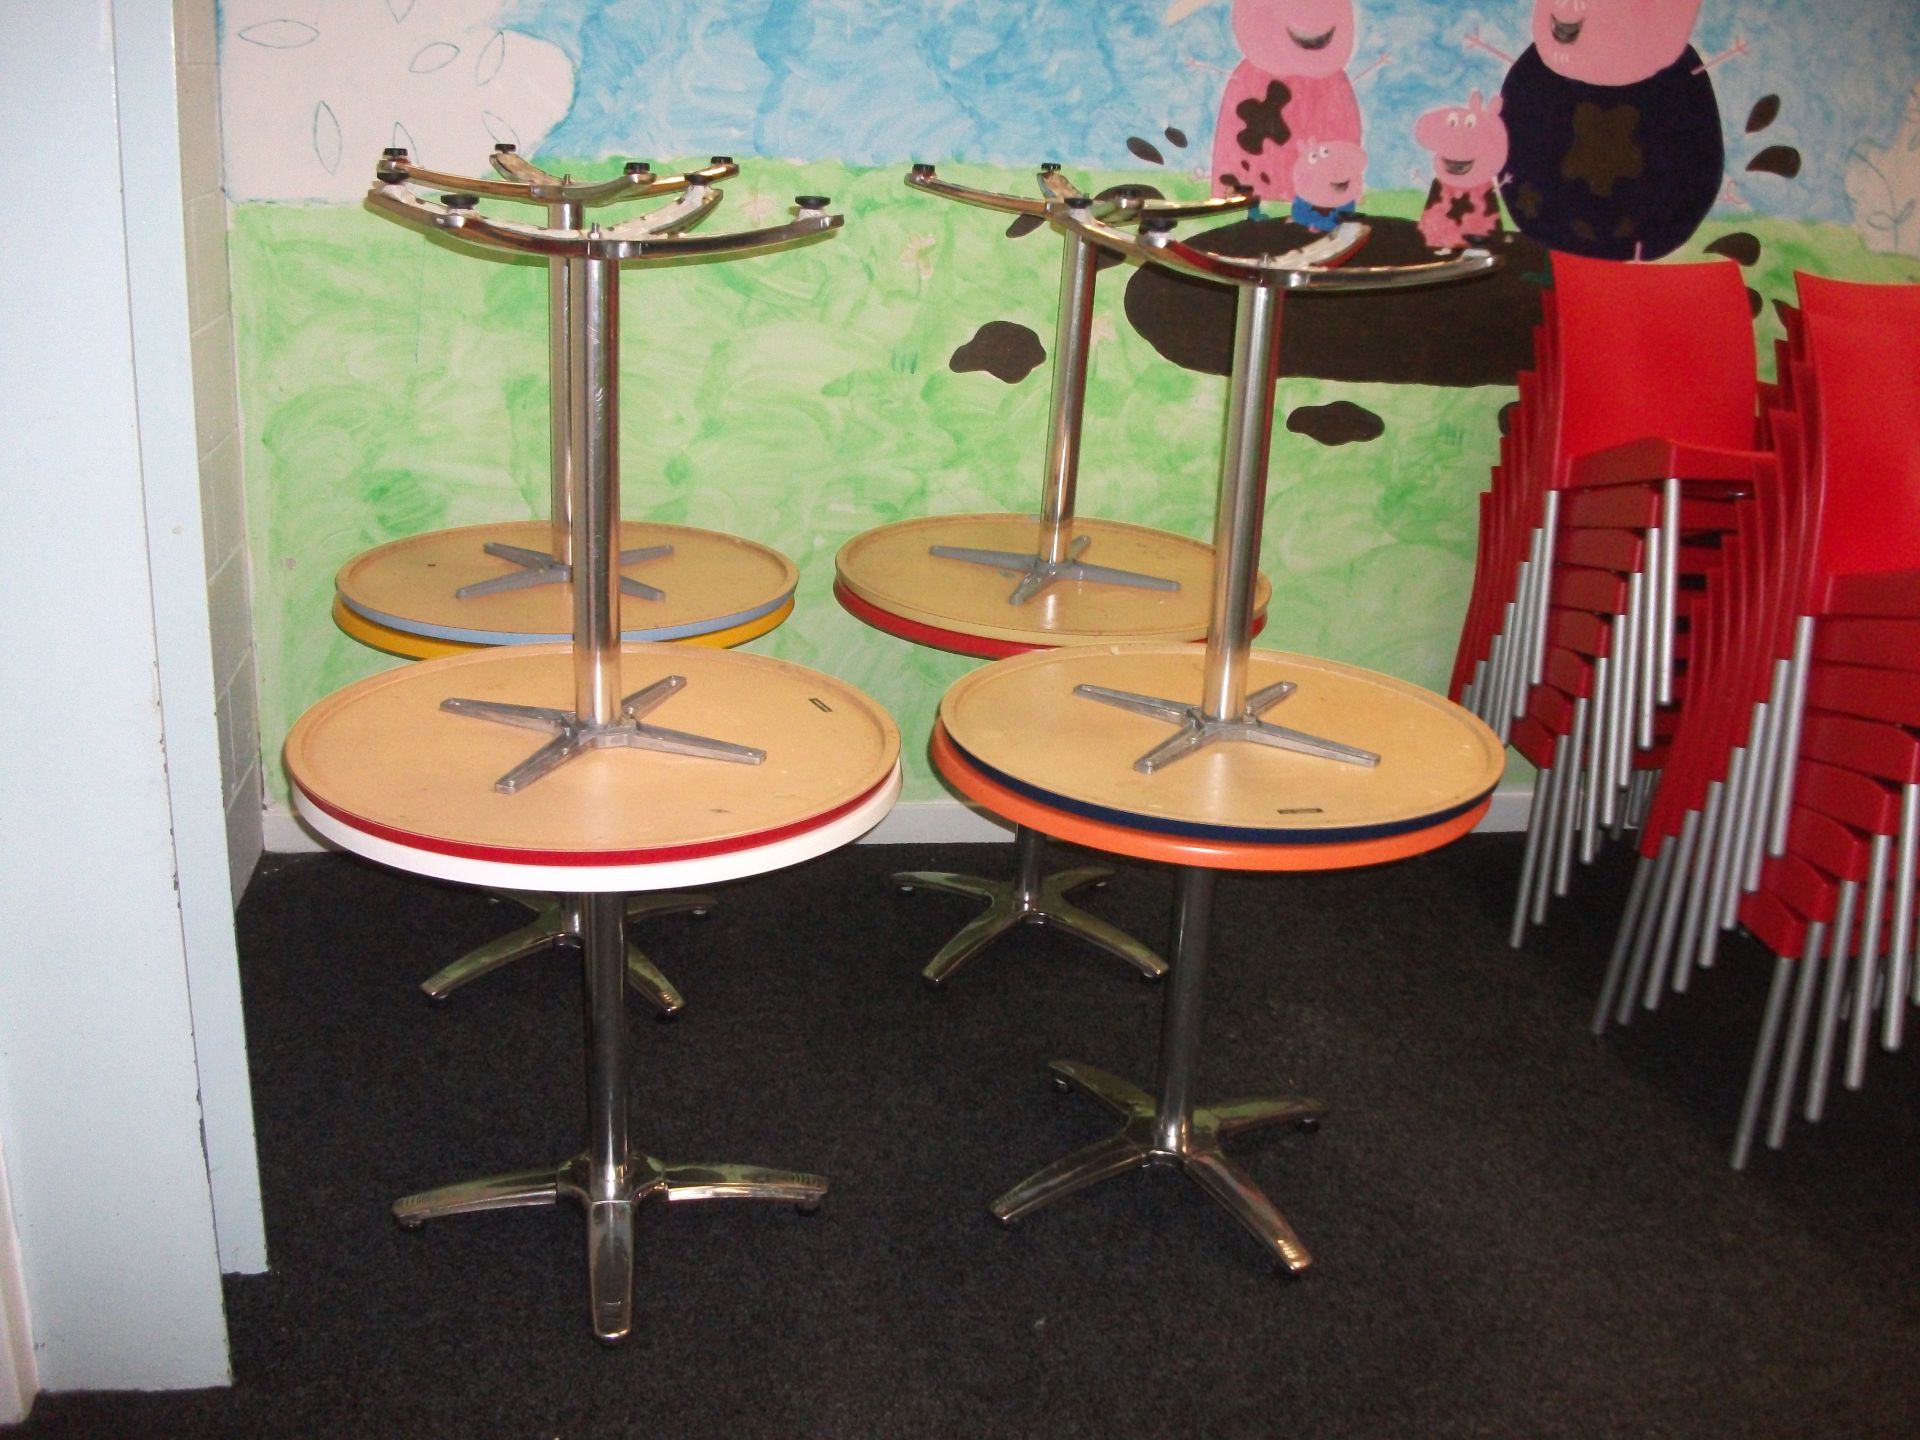 4 x Various Chromed Based Circular Bistro Tables